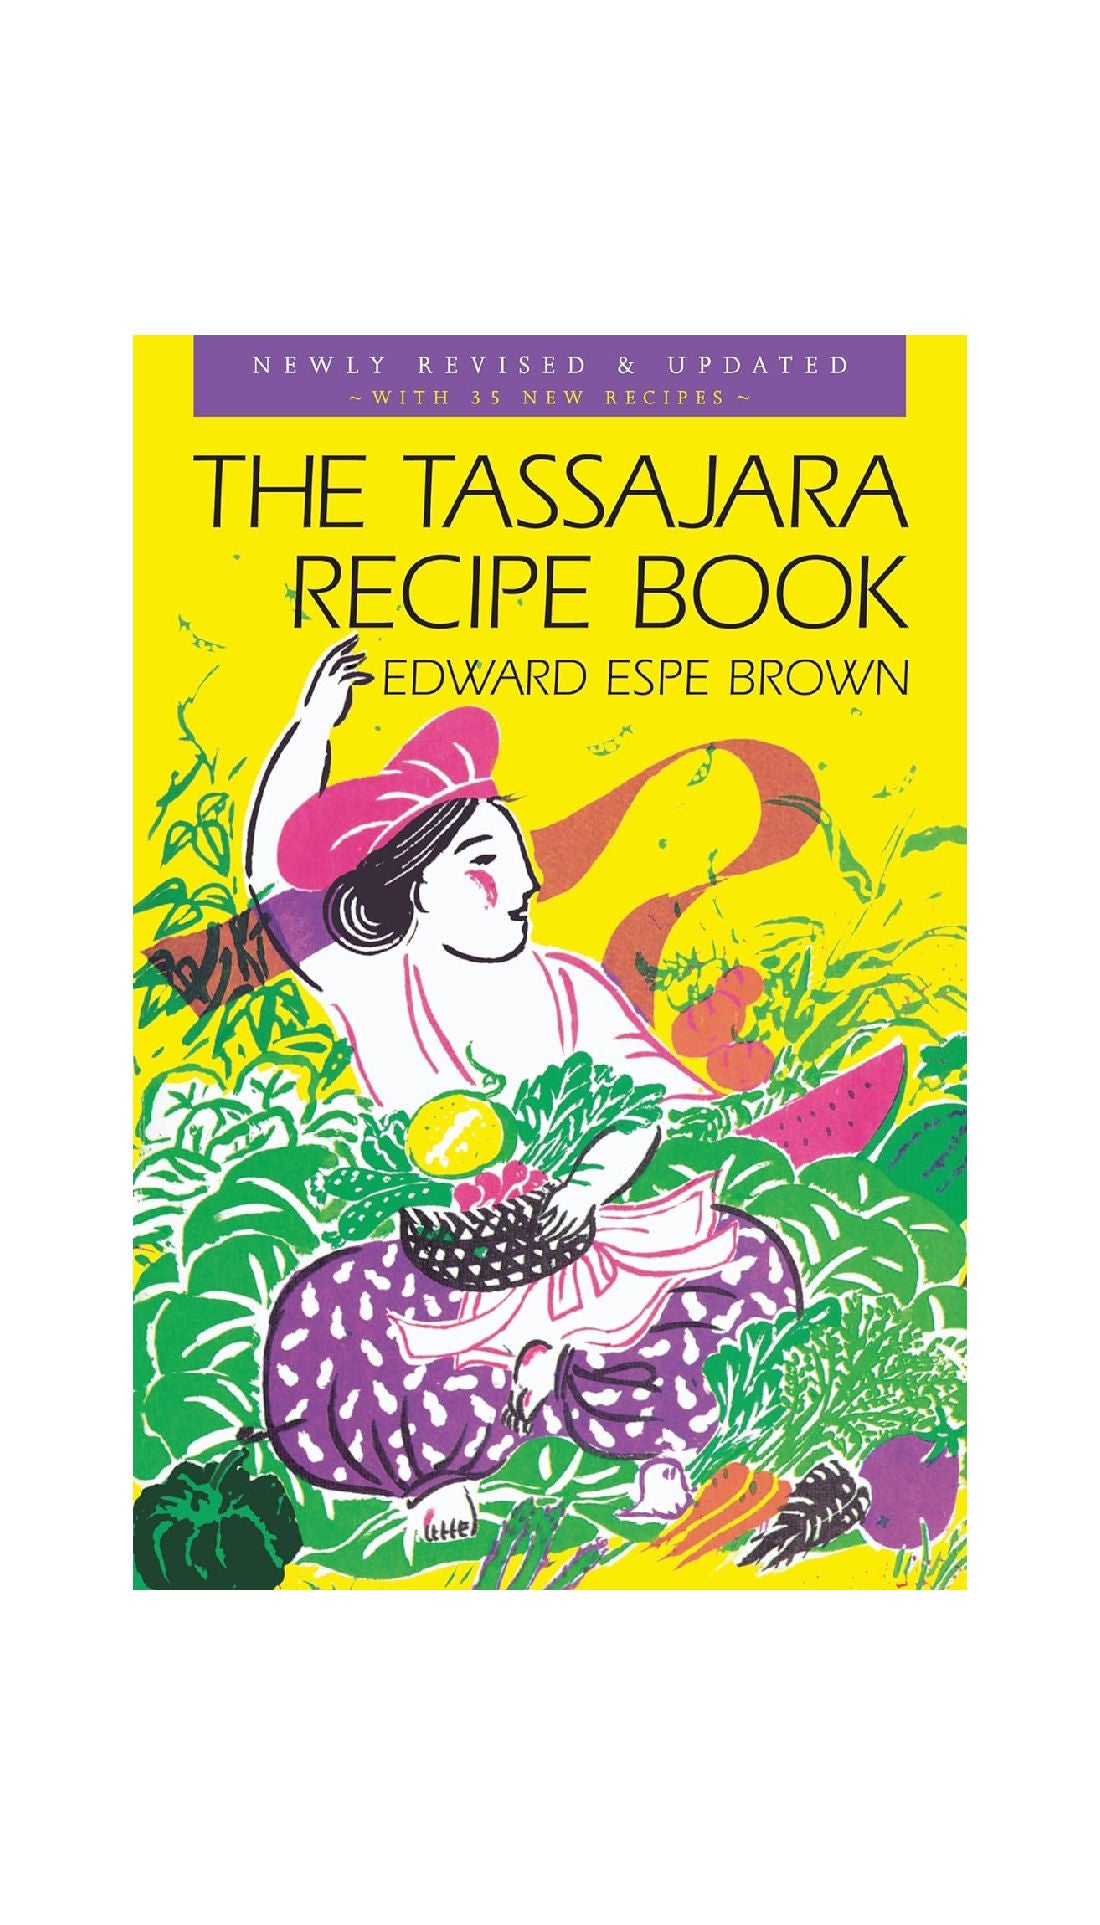 The Tassajara Recipe Book